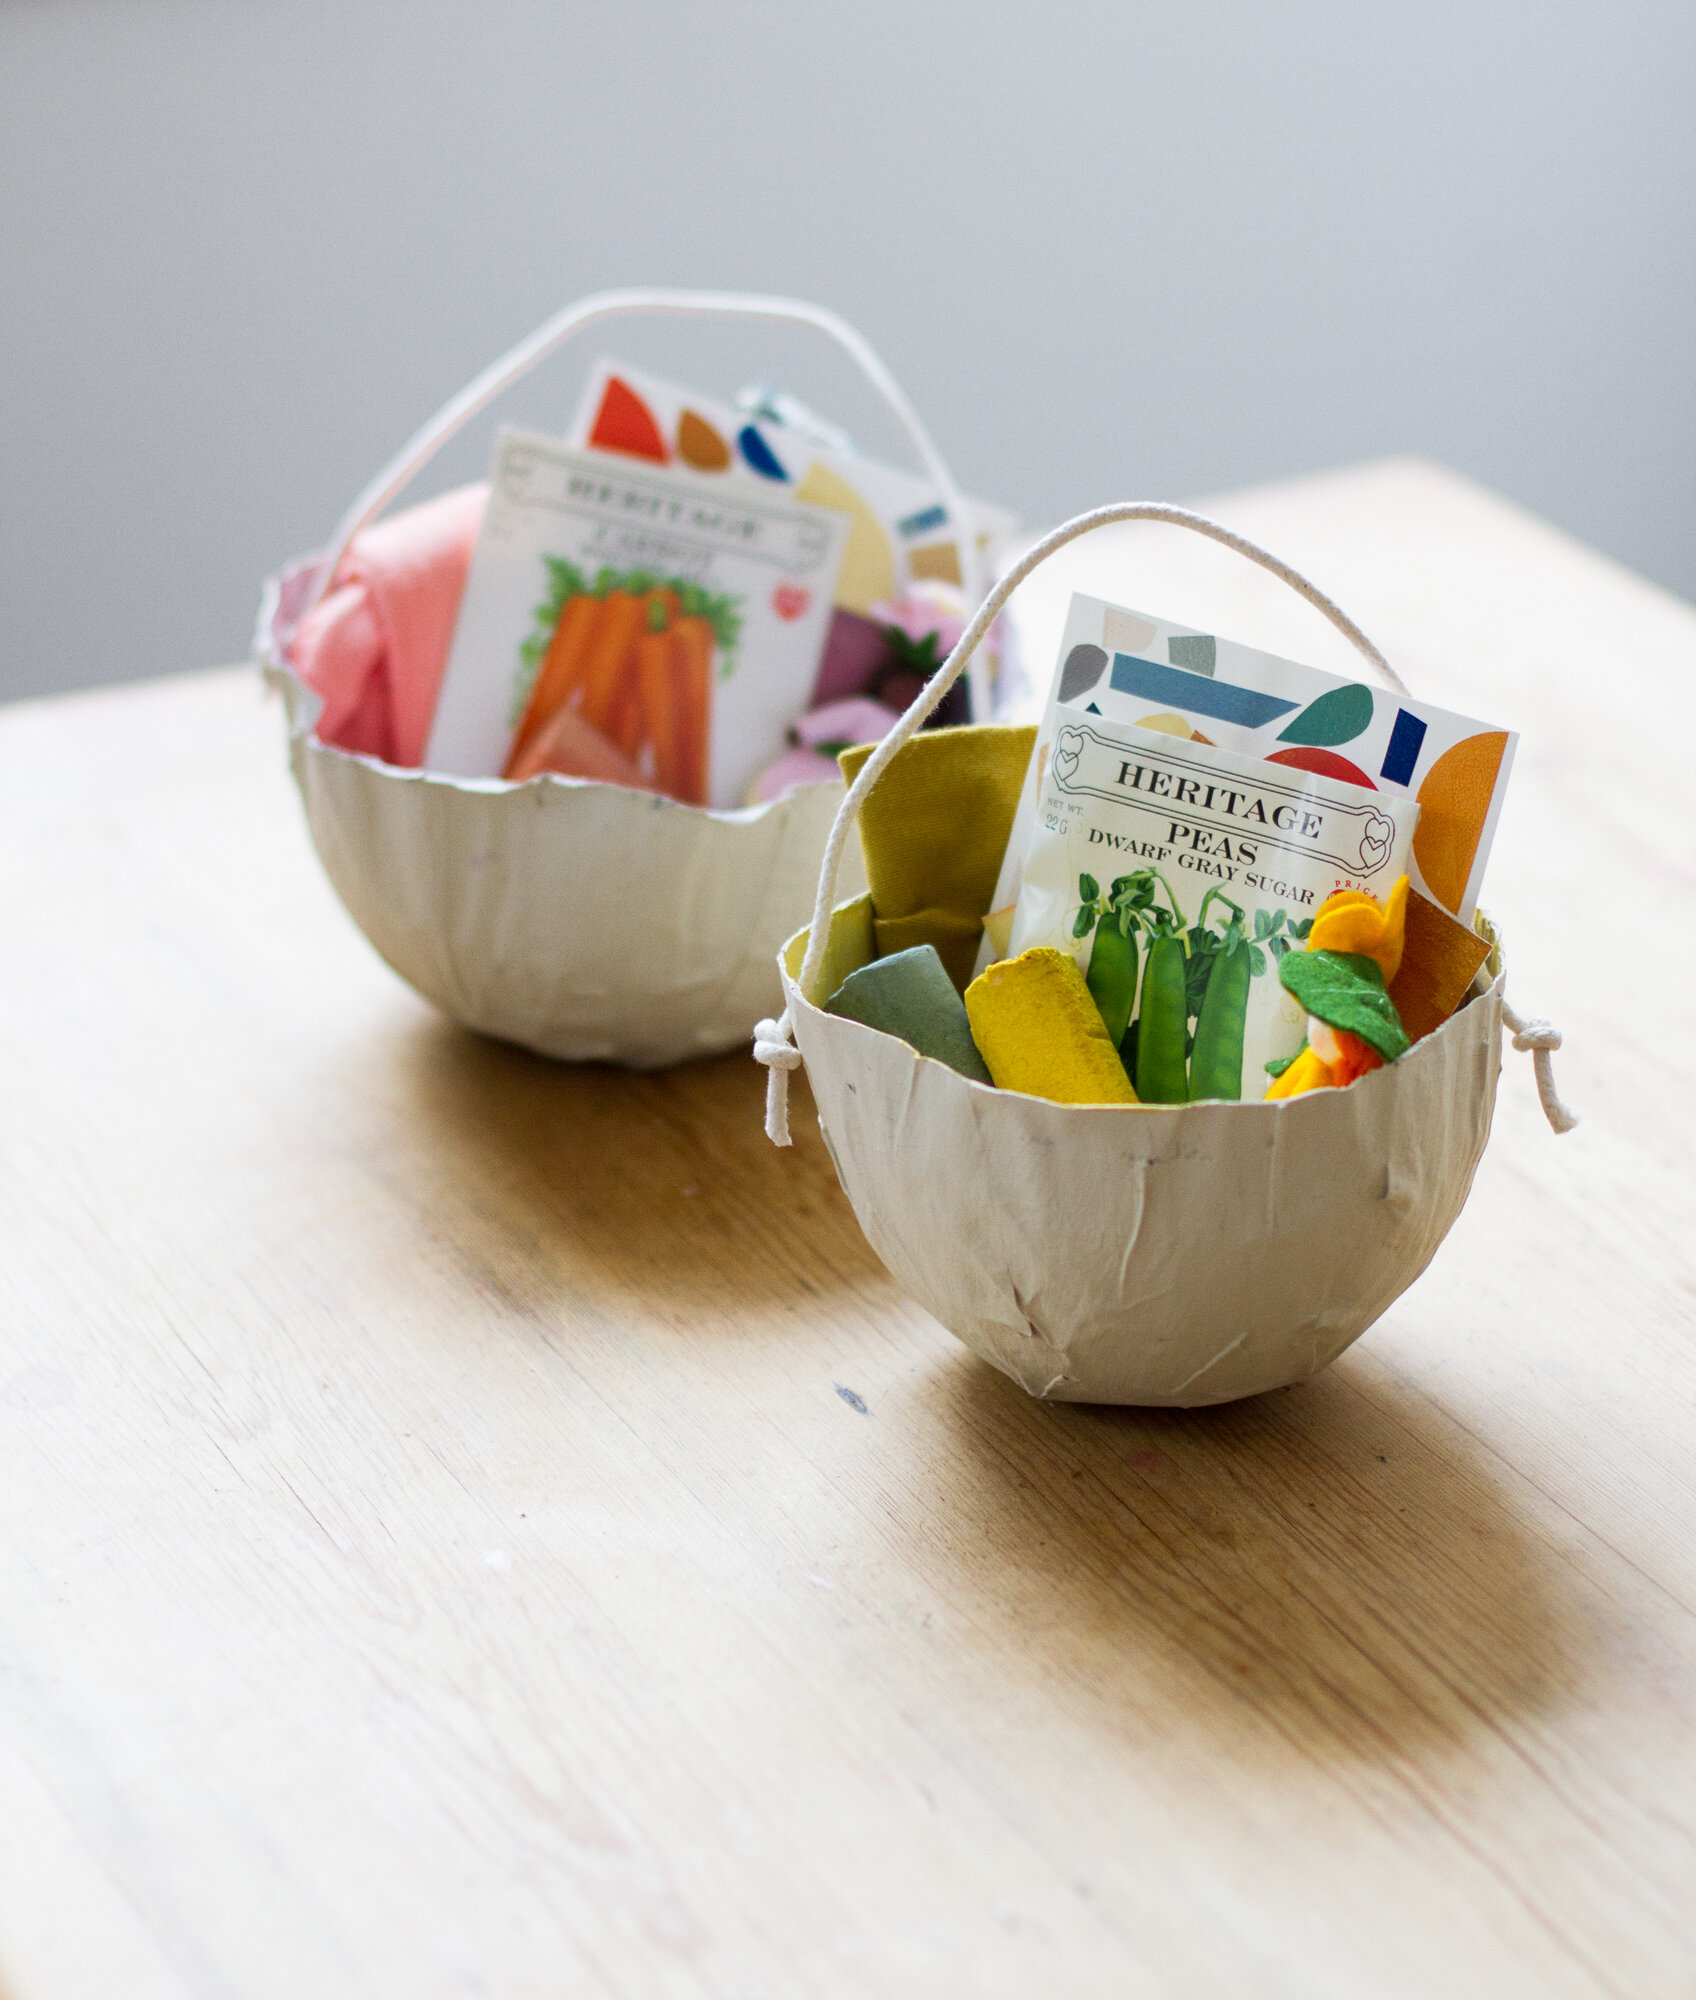 papier-mache easter baskets | reading my tea leaves